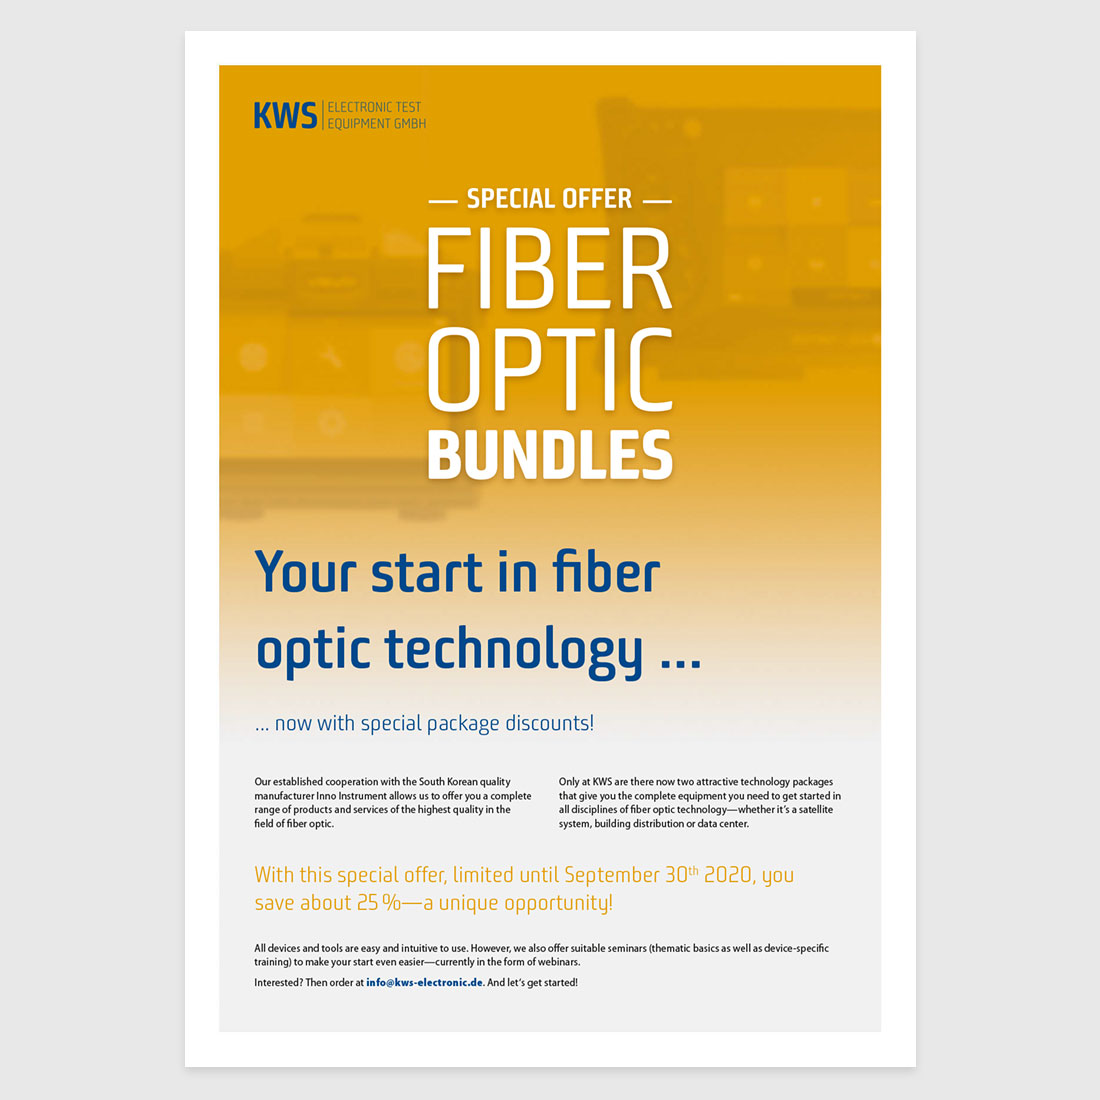 KWS Electronic News 2020: Special offer fiber optic bundles